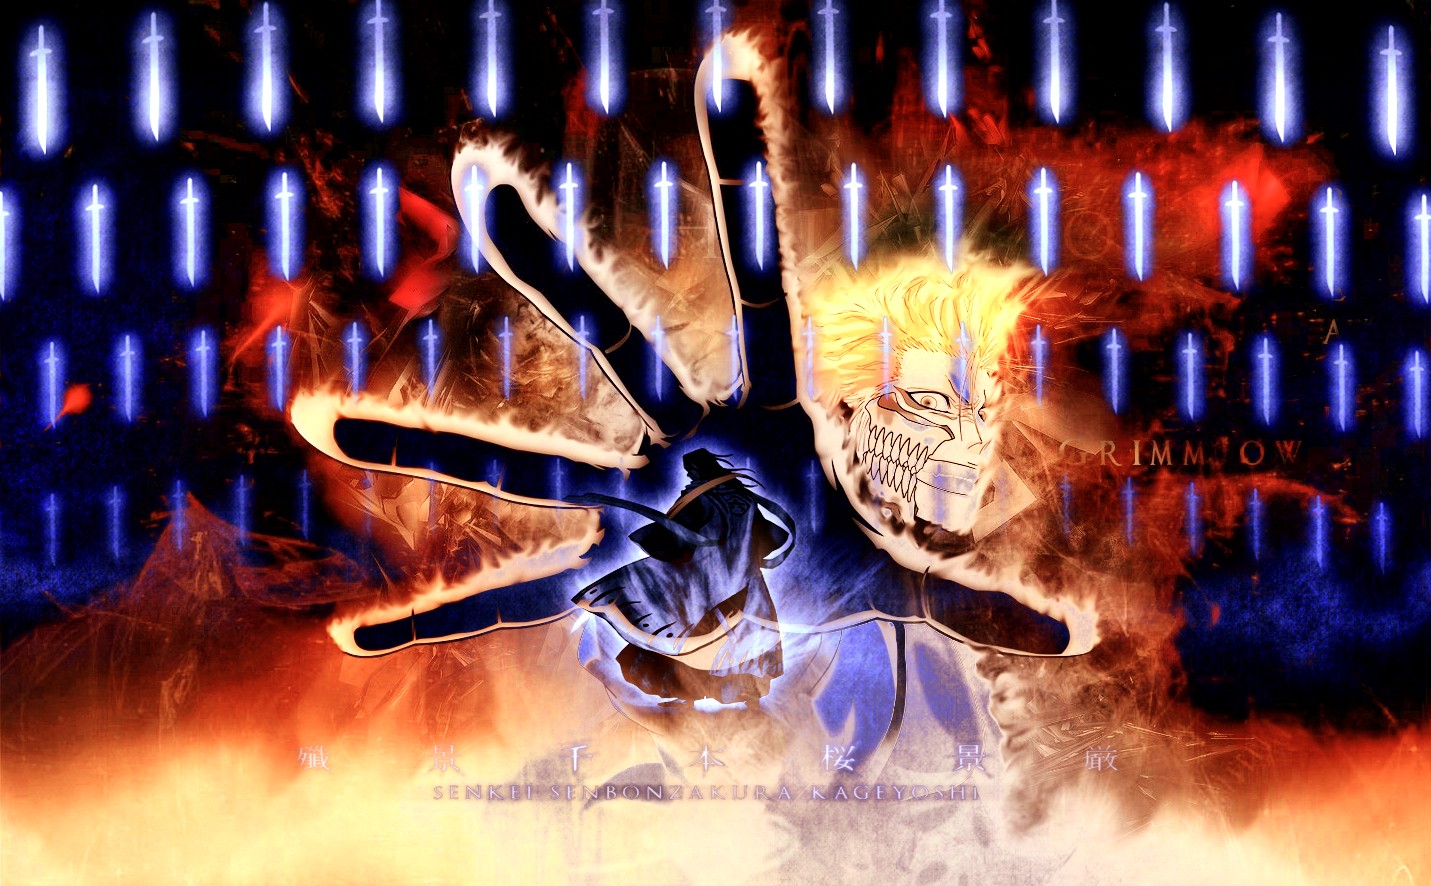 Anime 1431x886 Bleach Grimmjow Jaegerjaquez Kuchiki Byakuya sword Espada anime anime men fire hands